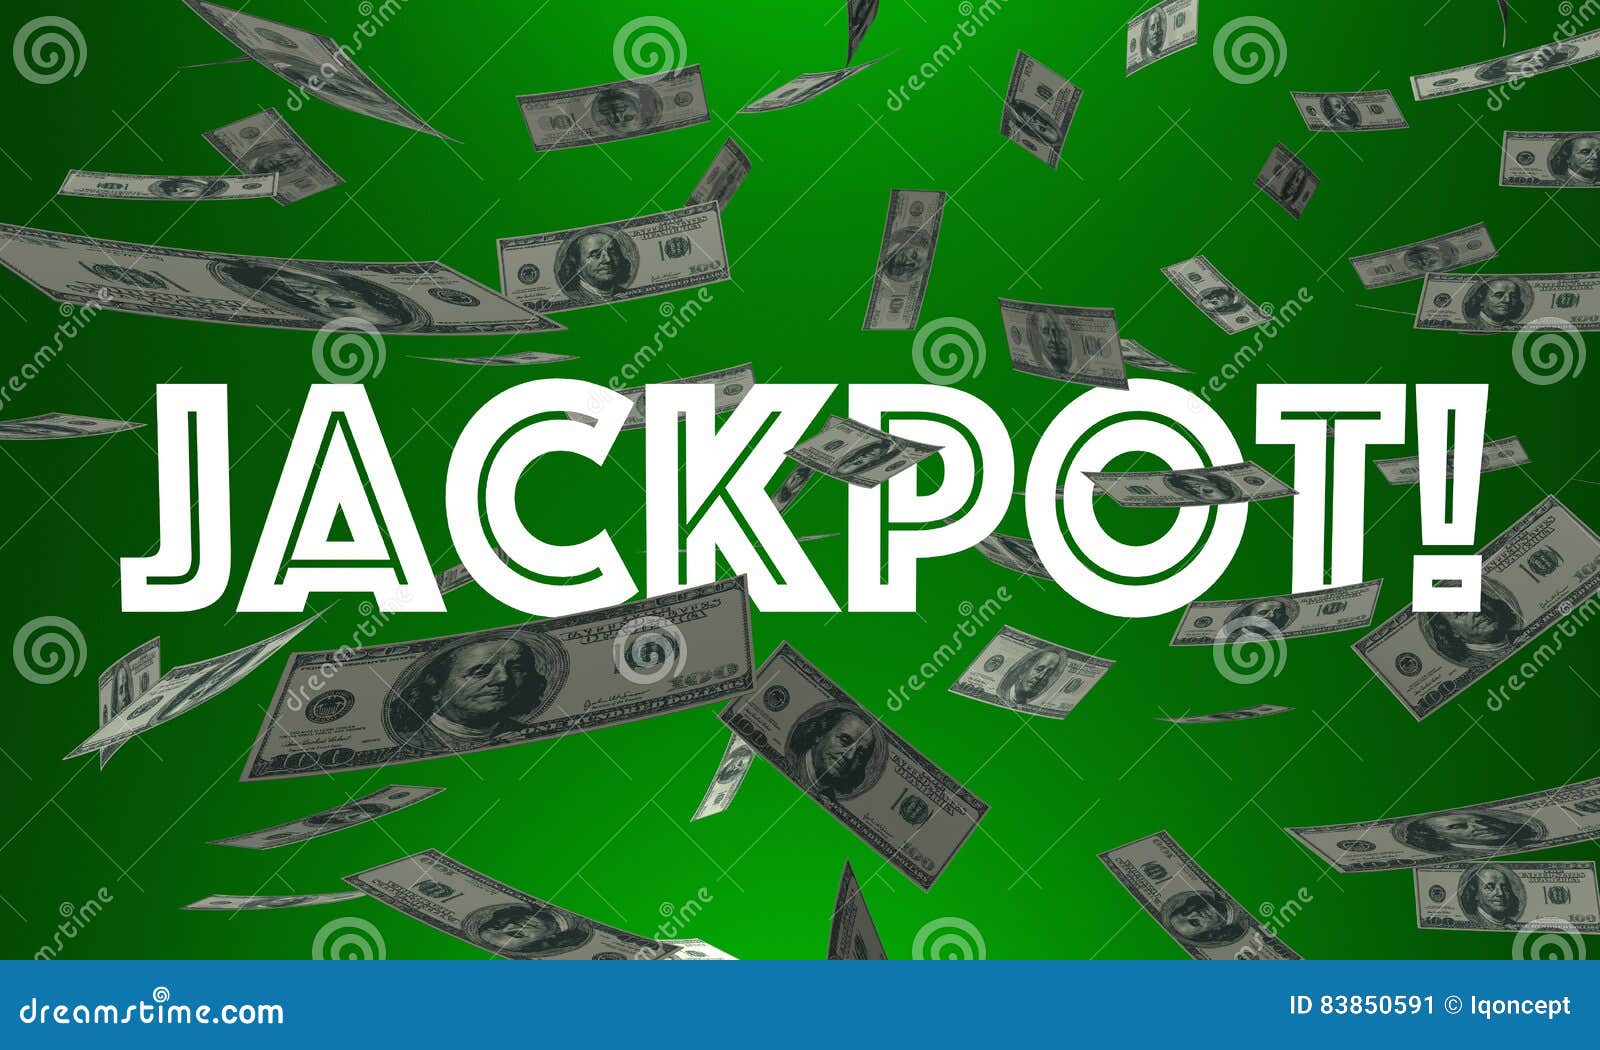 jackpot money falling winnings cash payout contest prize